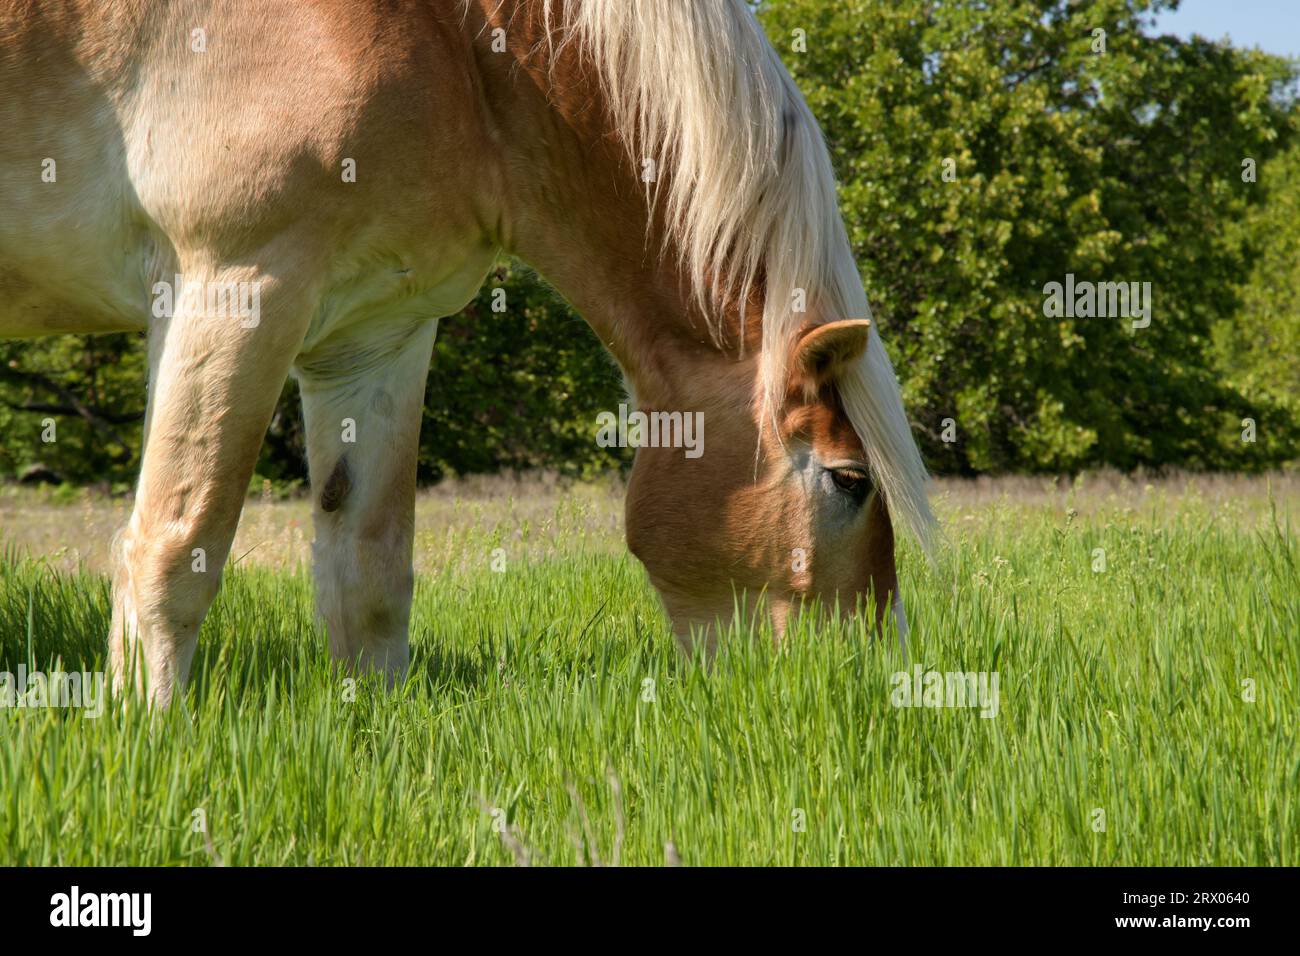 Belgian draft horse in knee deep grass in spring, eating away Stock Photo